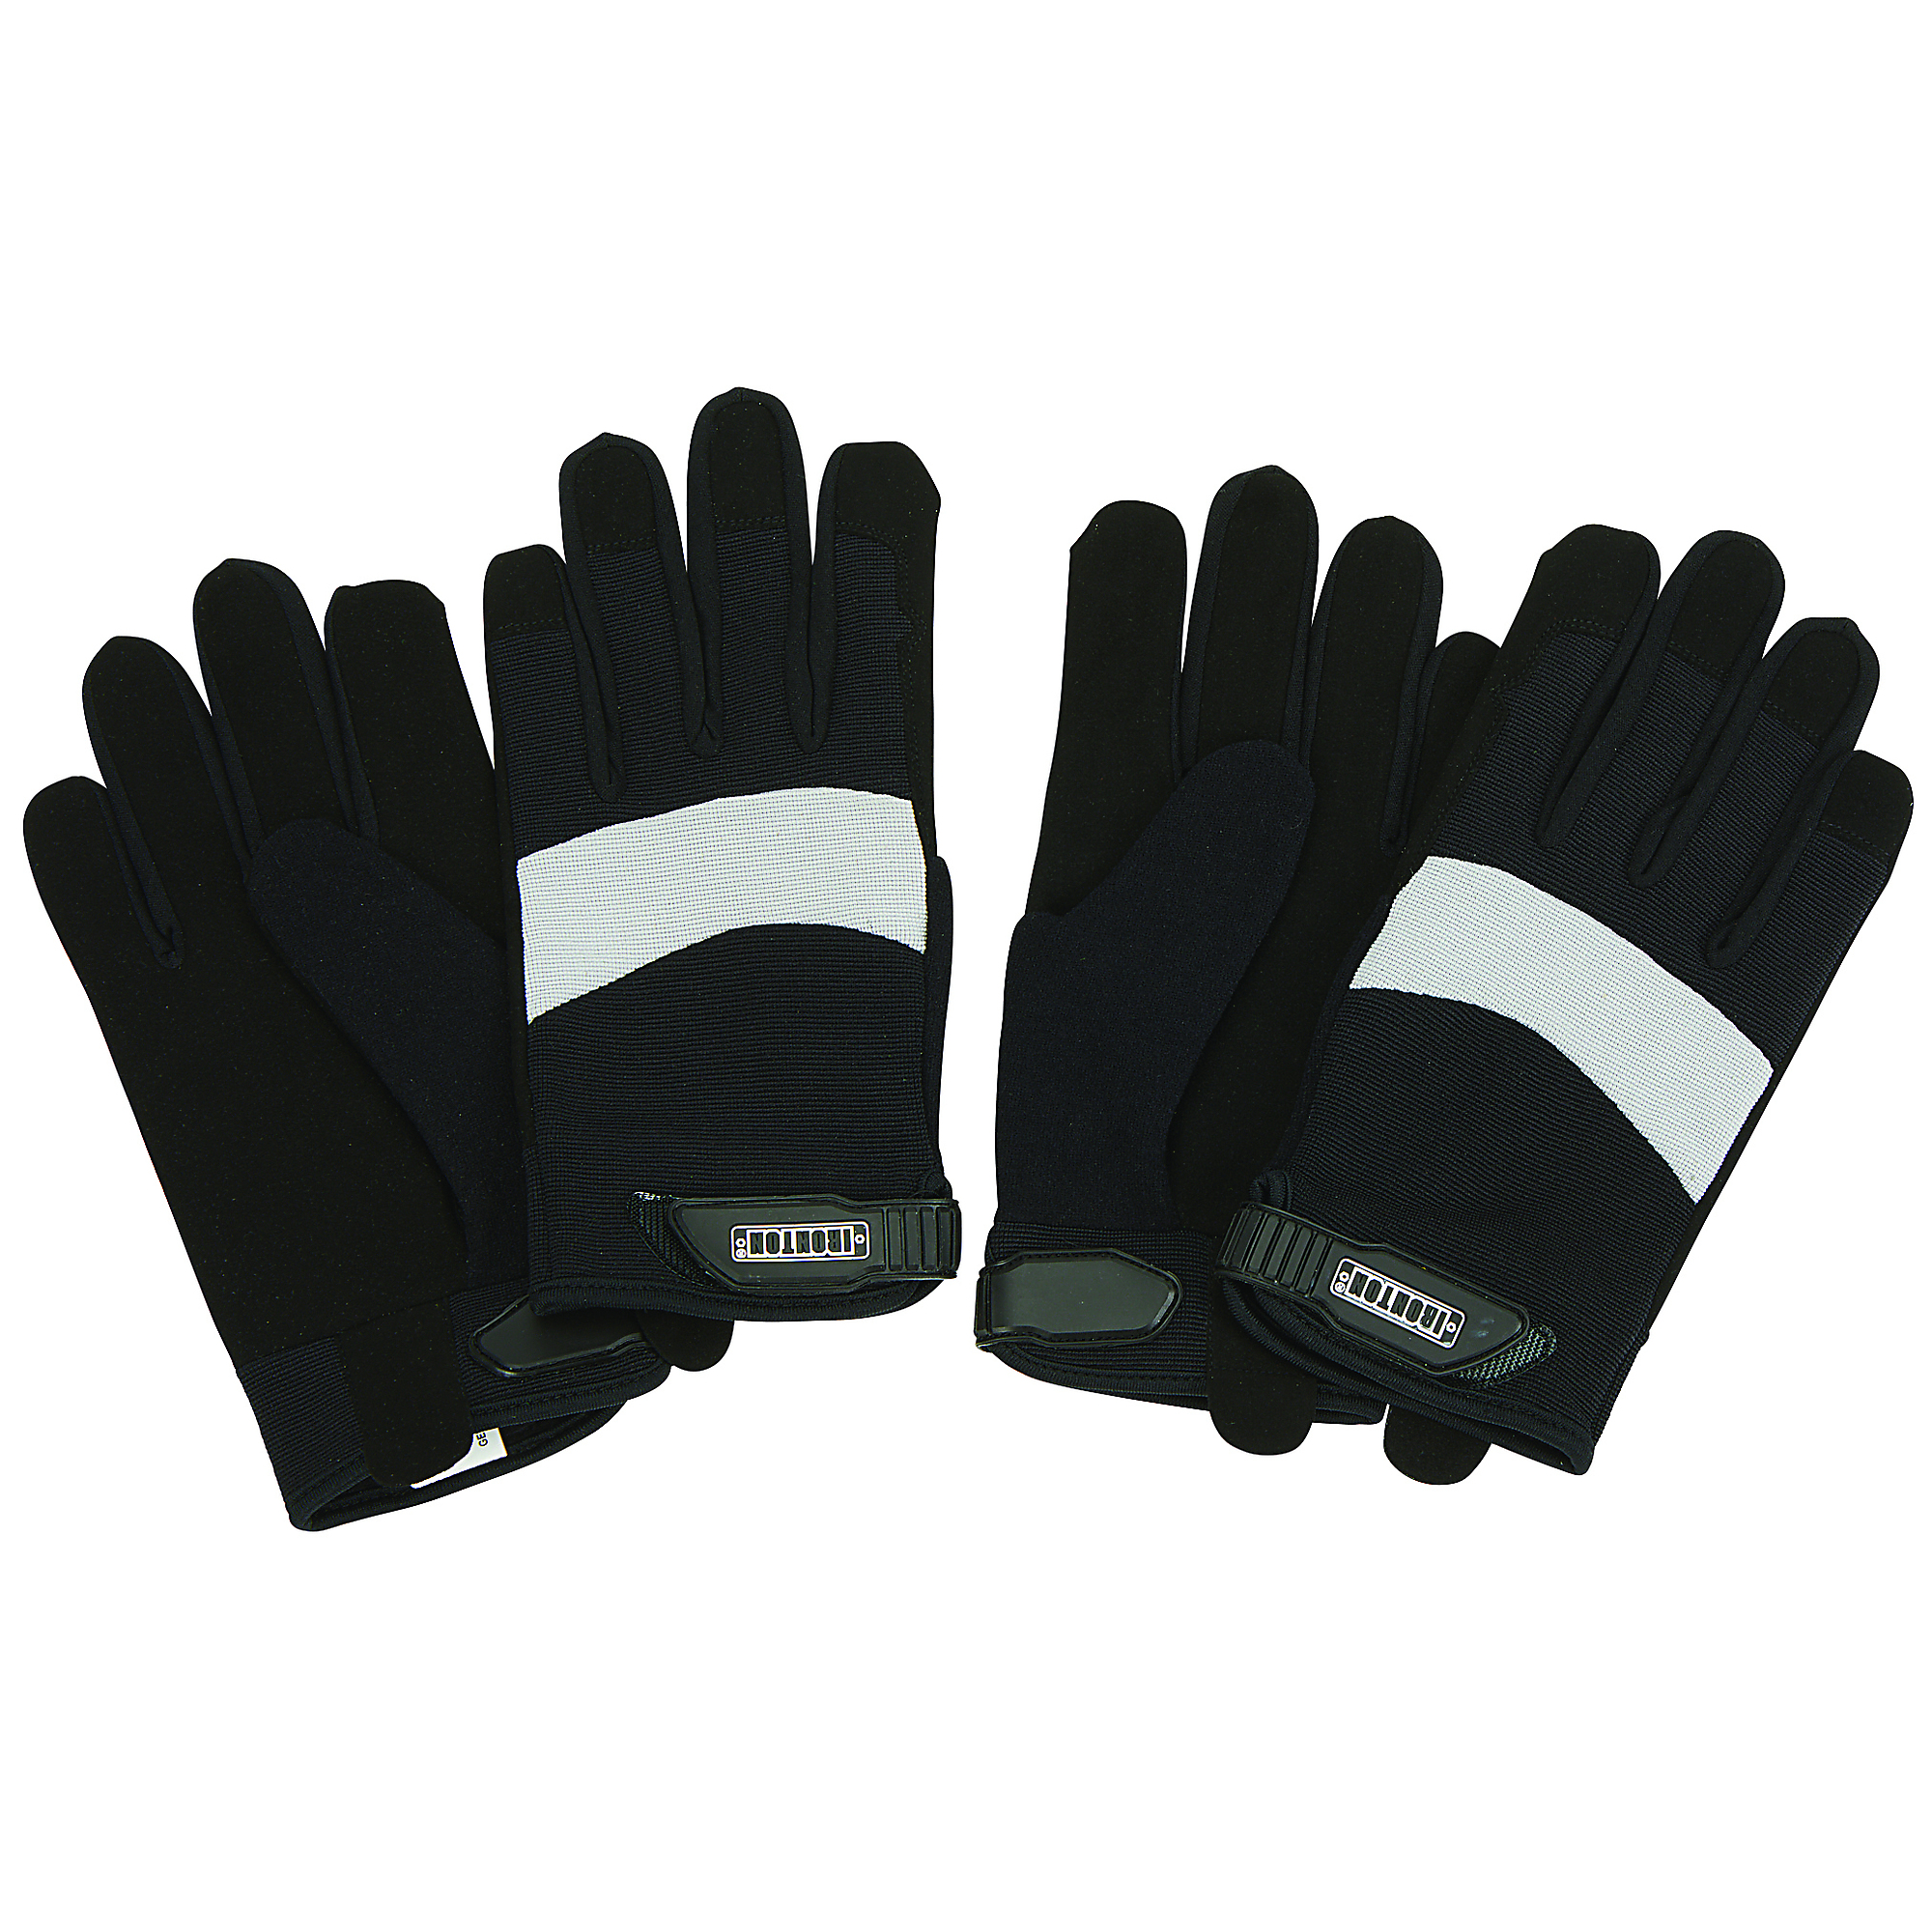 Ironton Men's High-Dexterity General-Purpose Work Gloves, 2 Pairs